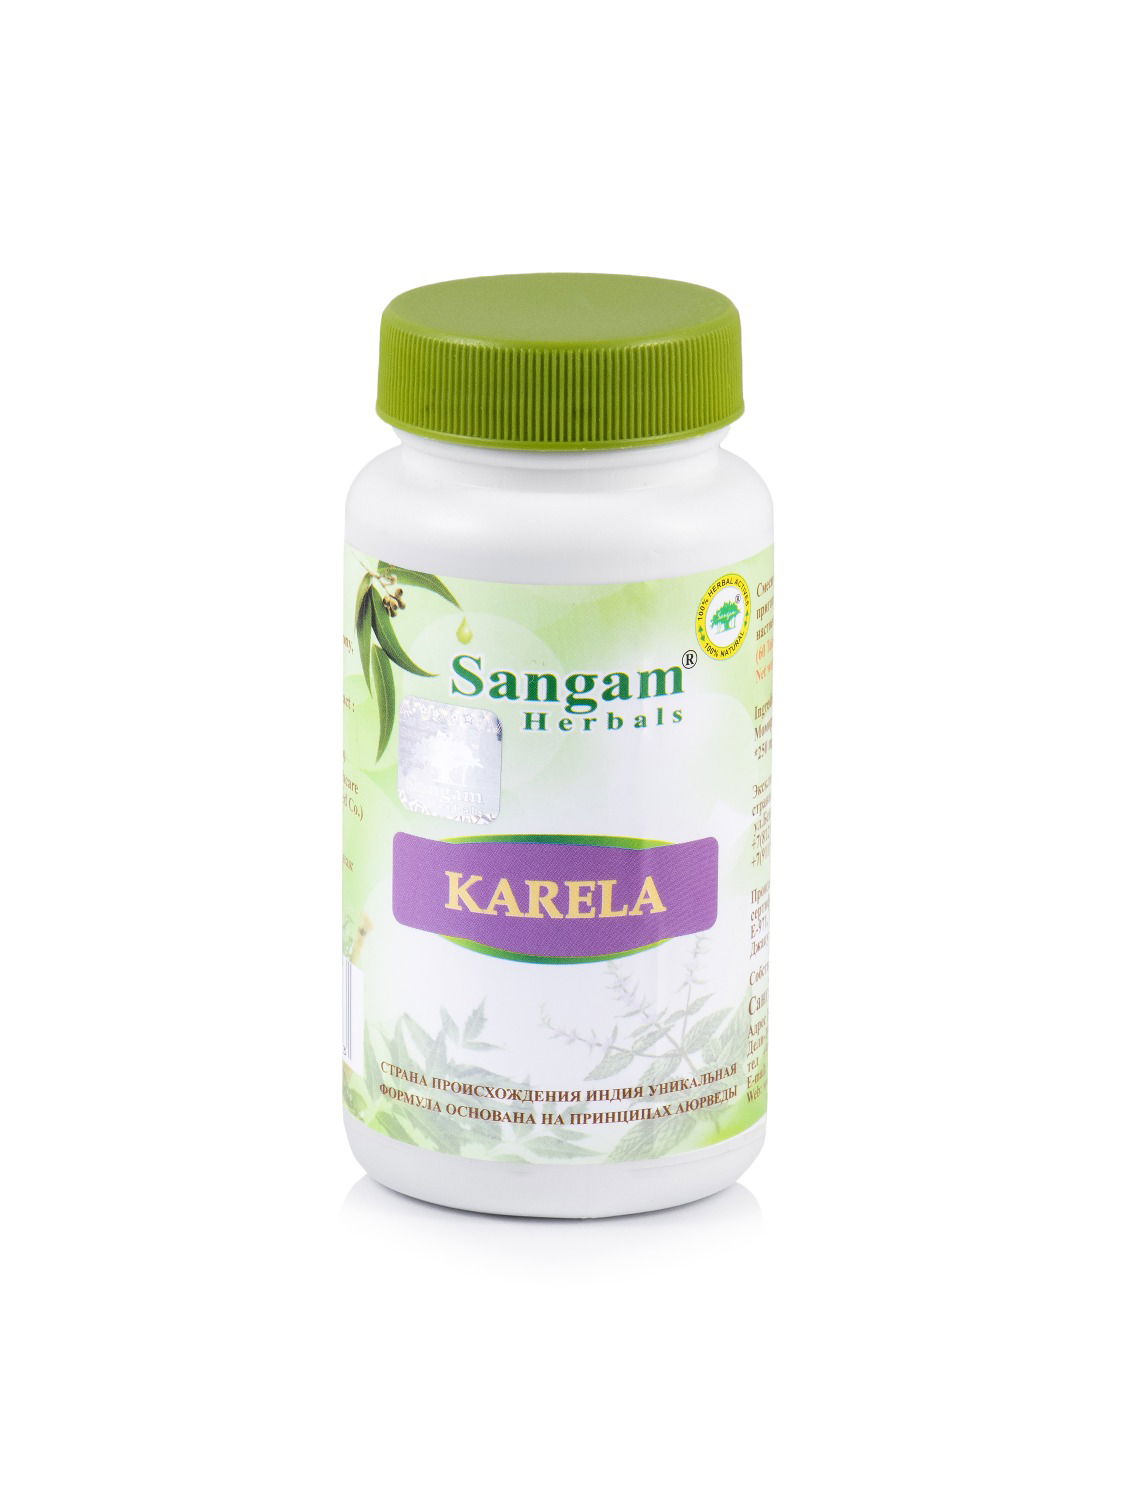 Карела Sangam Herbals (60 таблеток). 